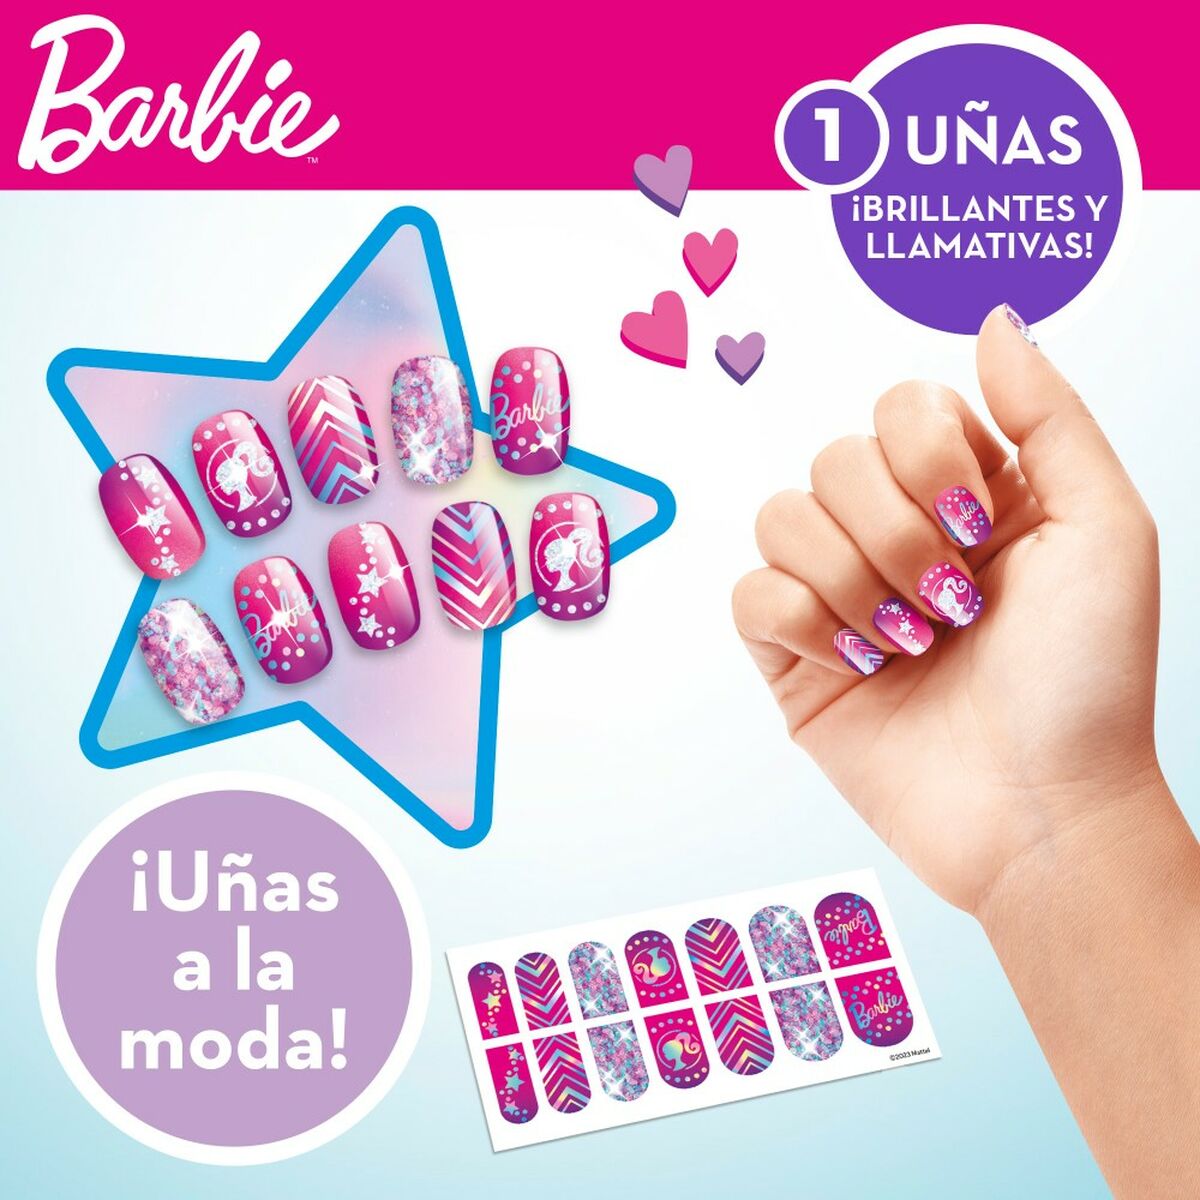 Schoonheidsset Barbie Sparkling 2 x 13 x 2 cm 3 in 1